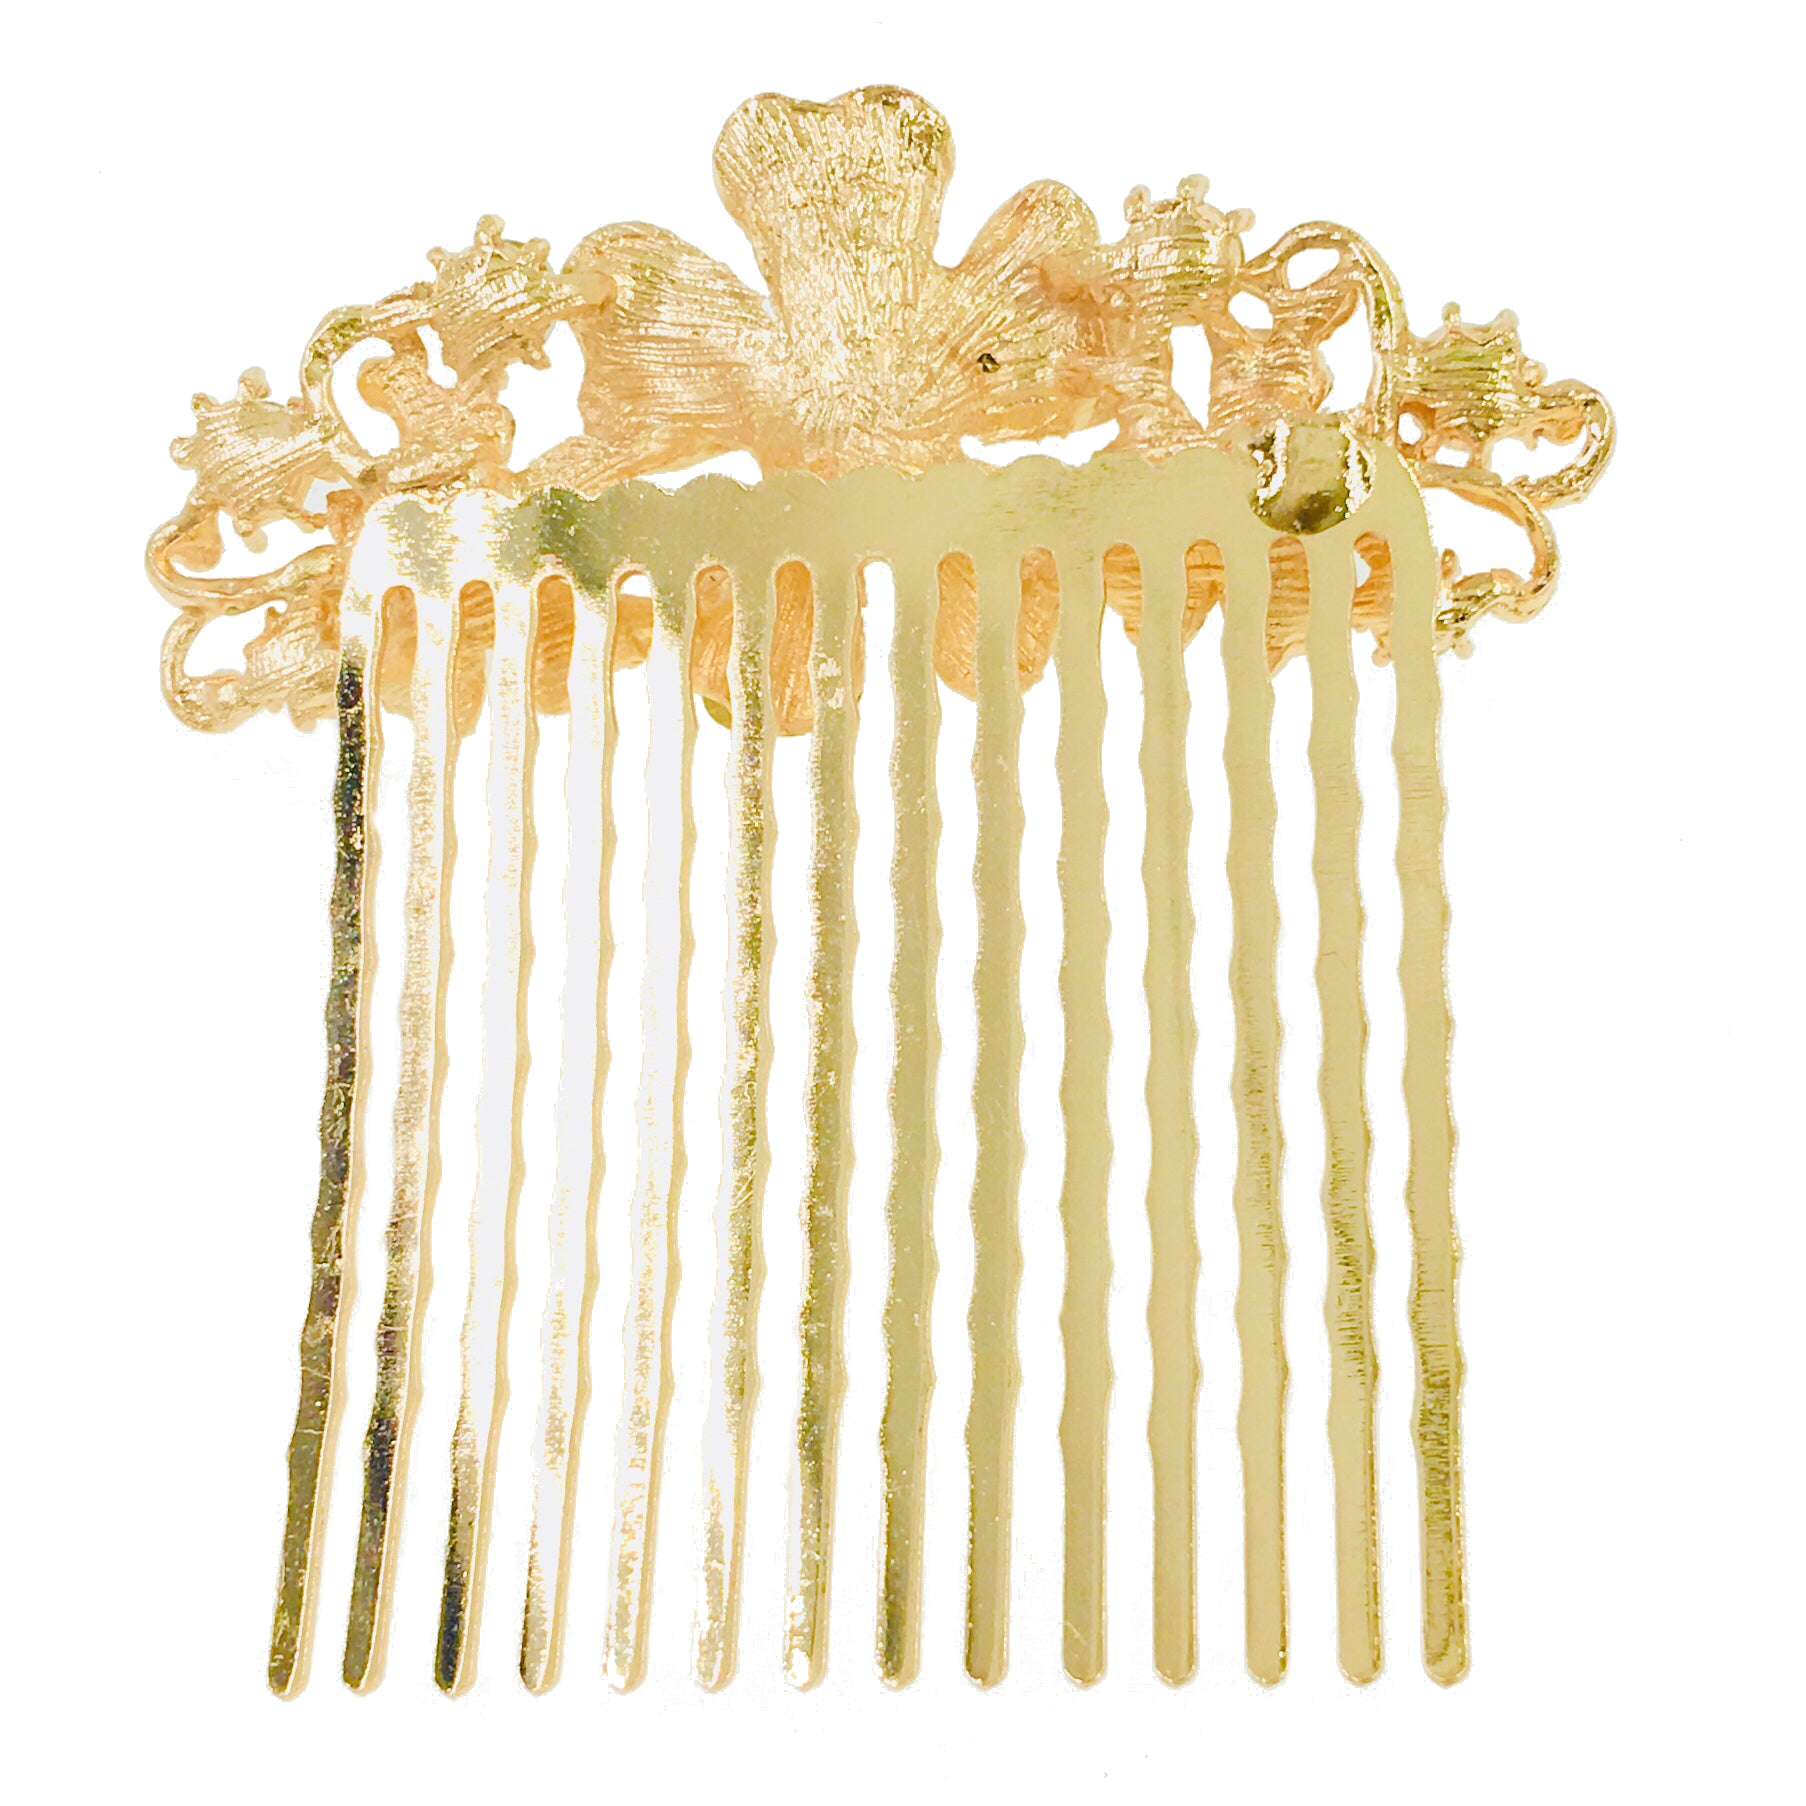 Leadwort Flower Cluster Hair Comb Swarovski Crystal gold base Gray Black, Hair Comb - MOGHANT